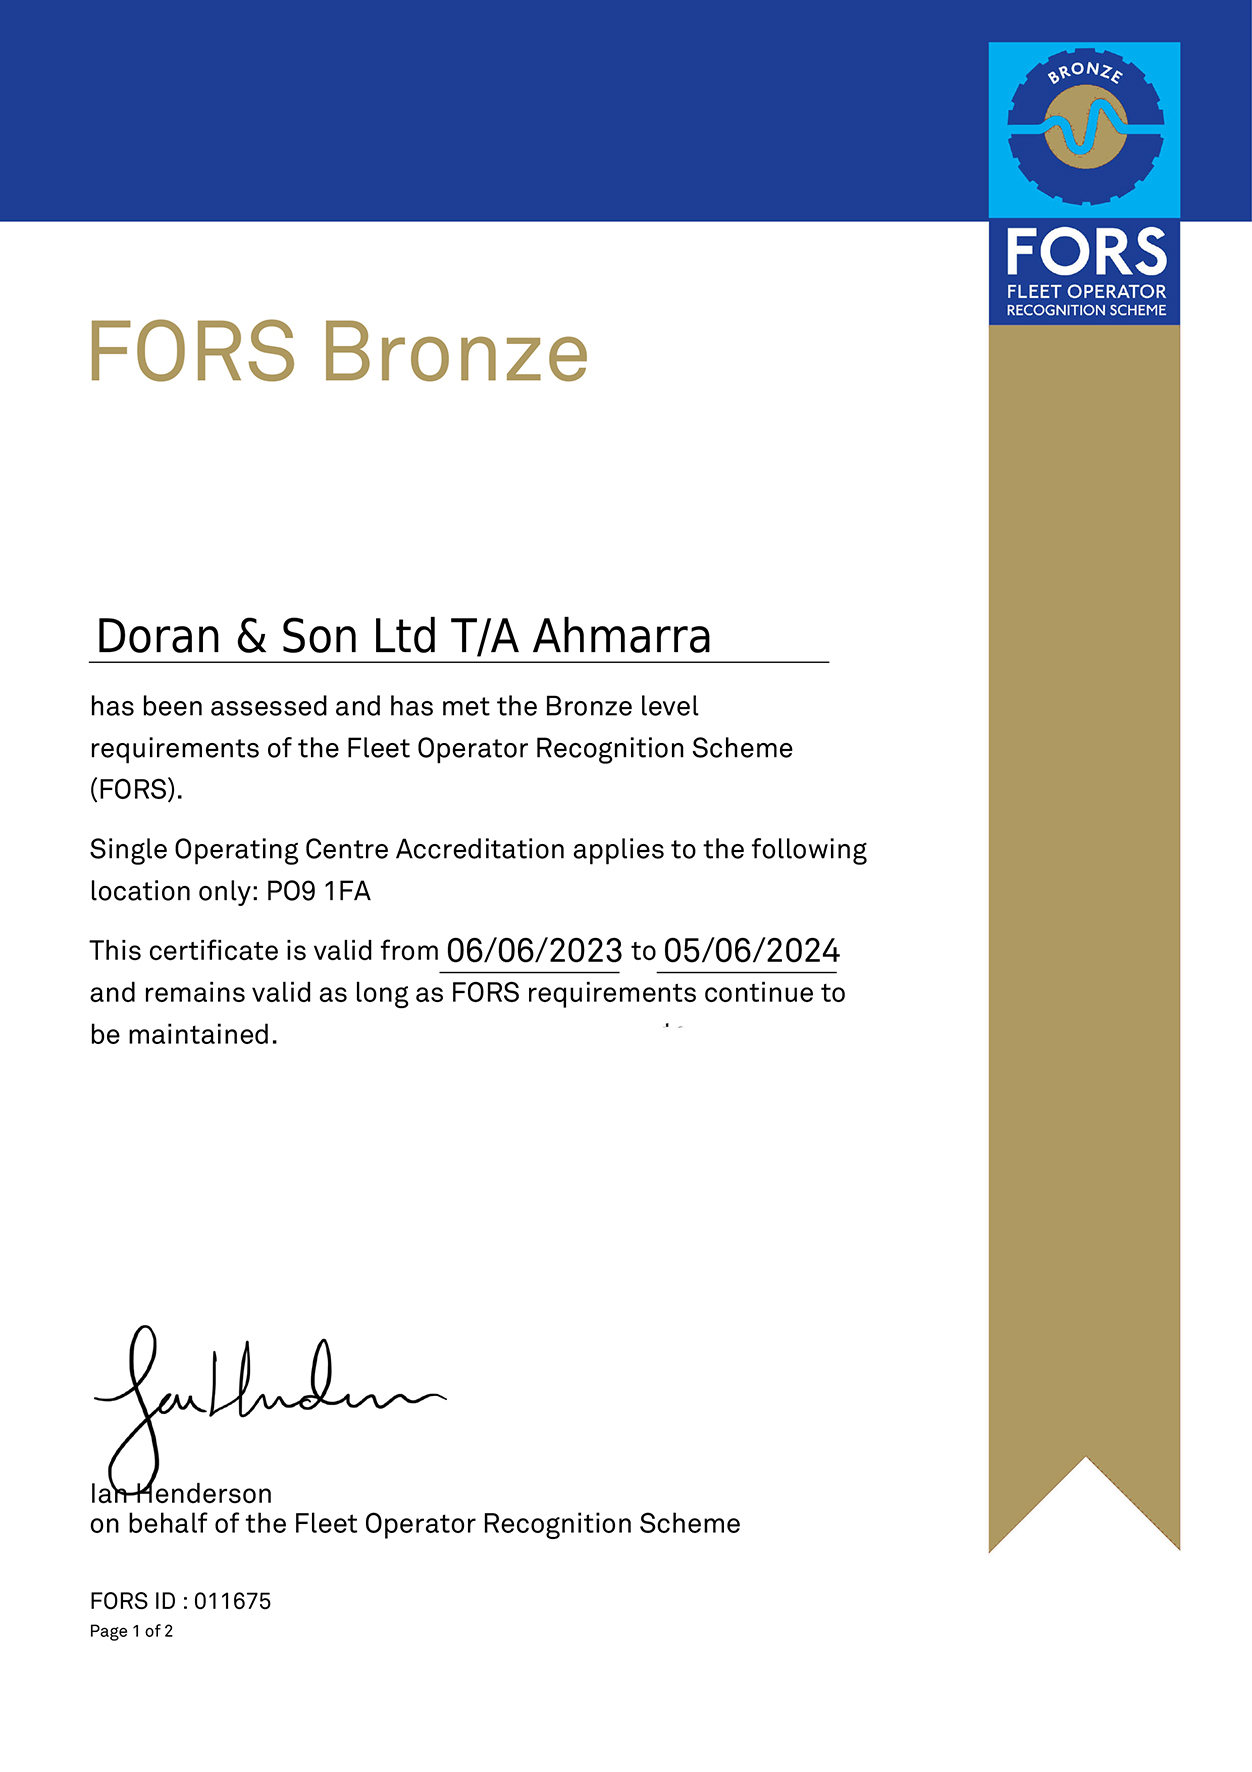 Ahmarra FORS Fleet Operator Recognition Scheme Bronze Certificate 2023-2024